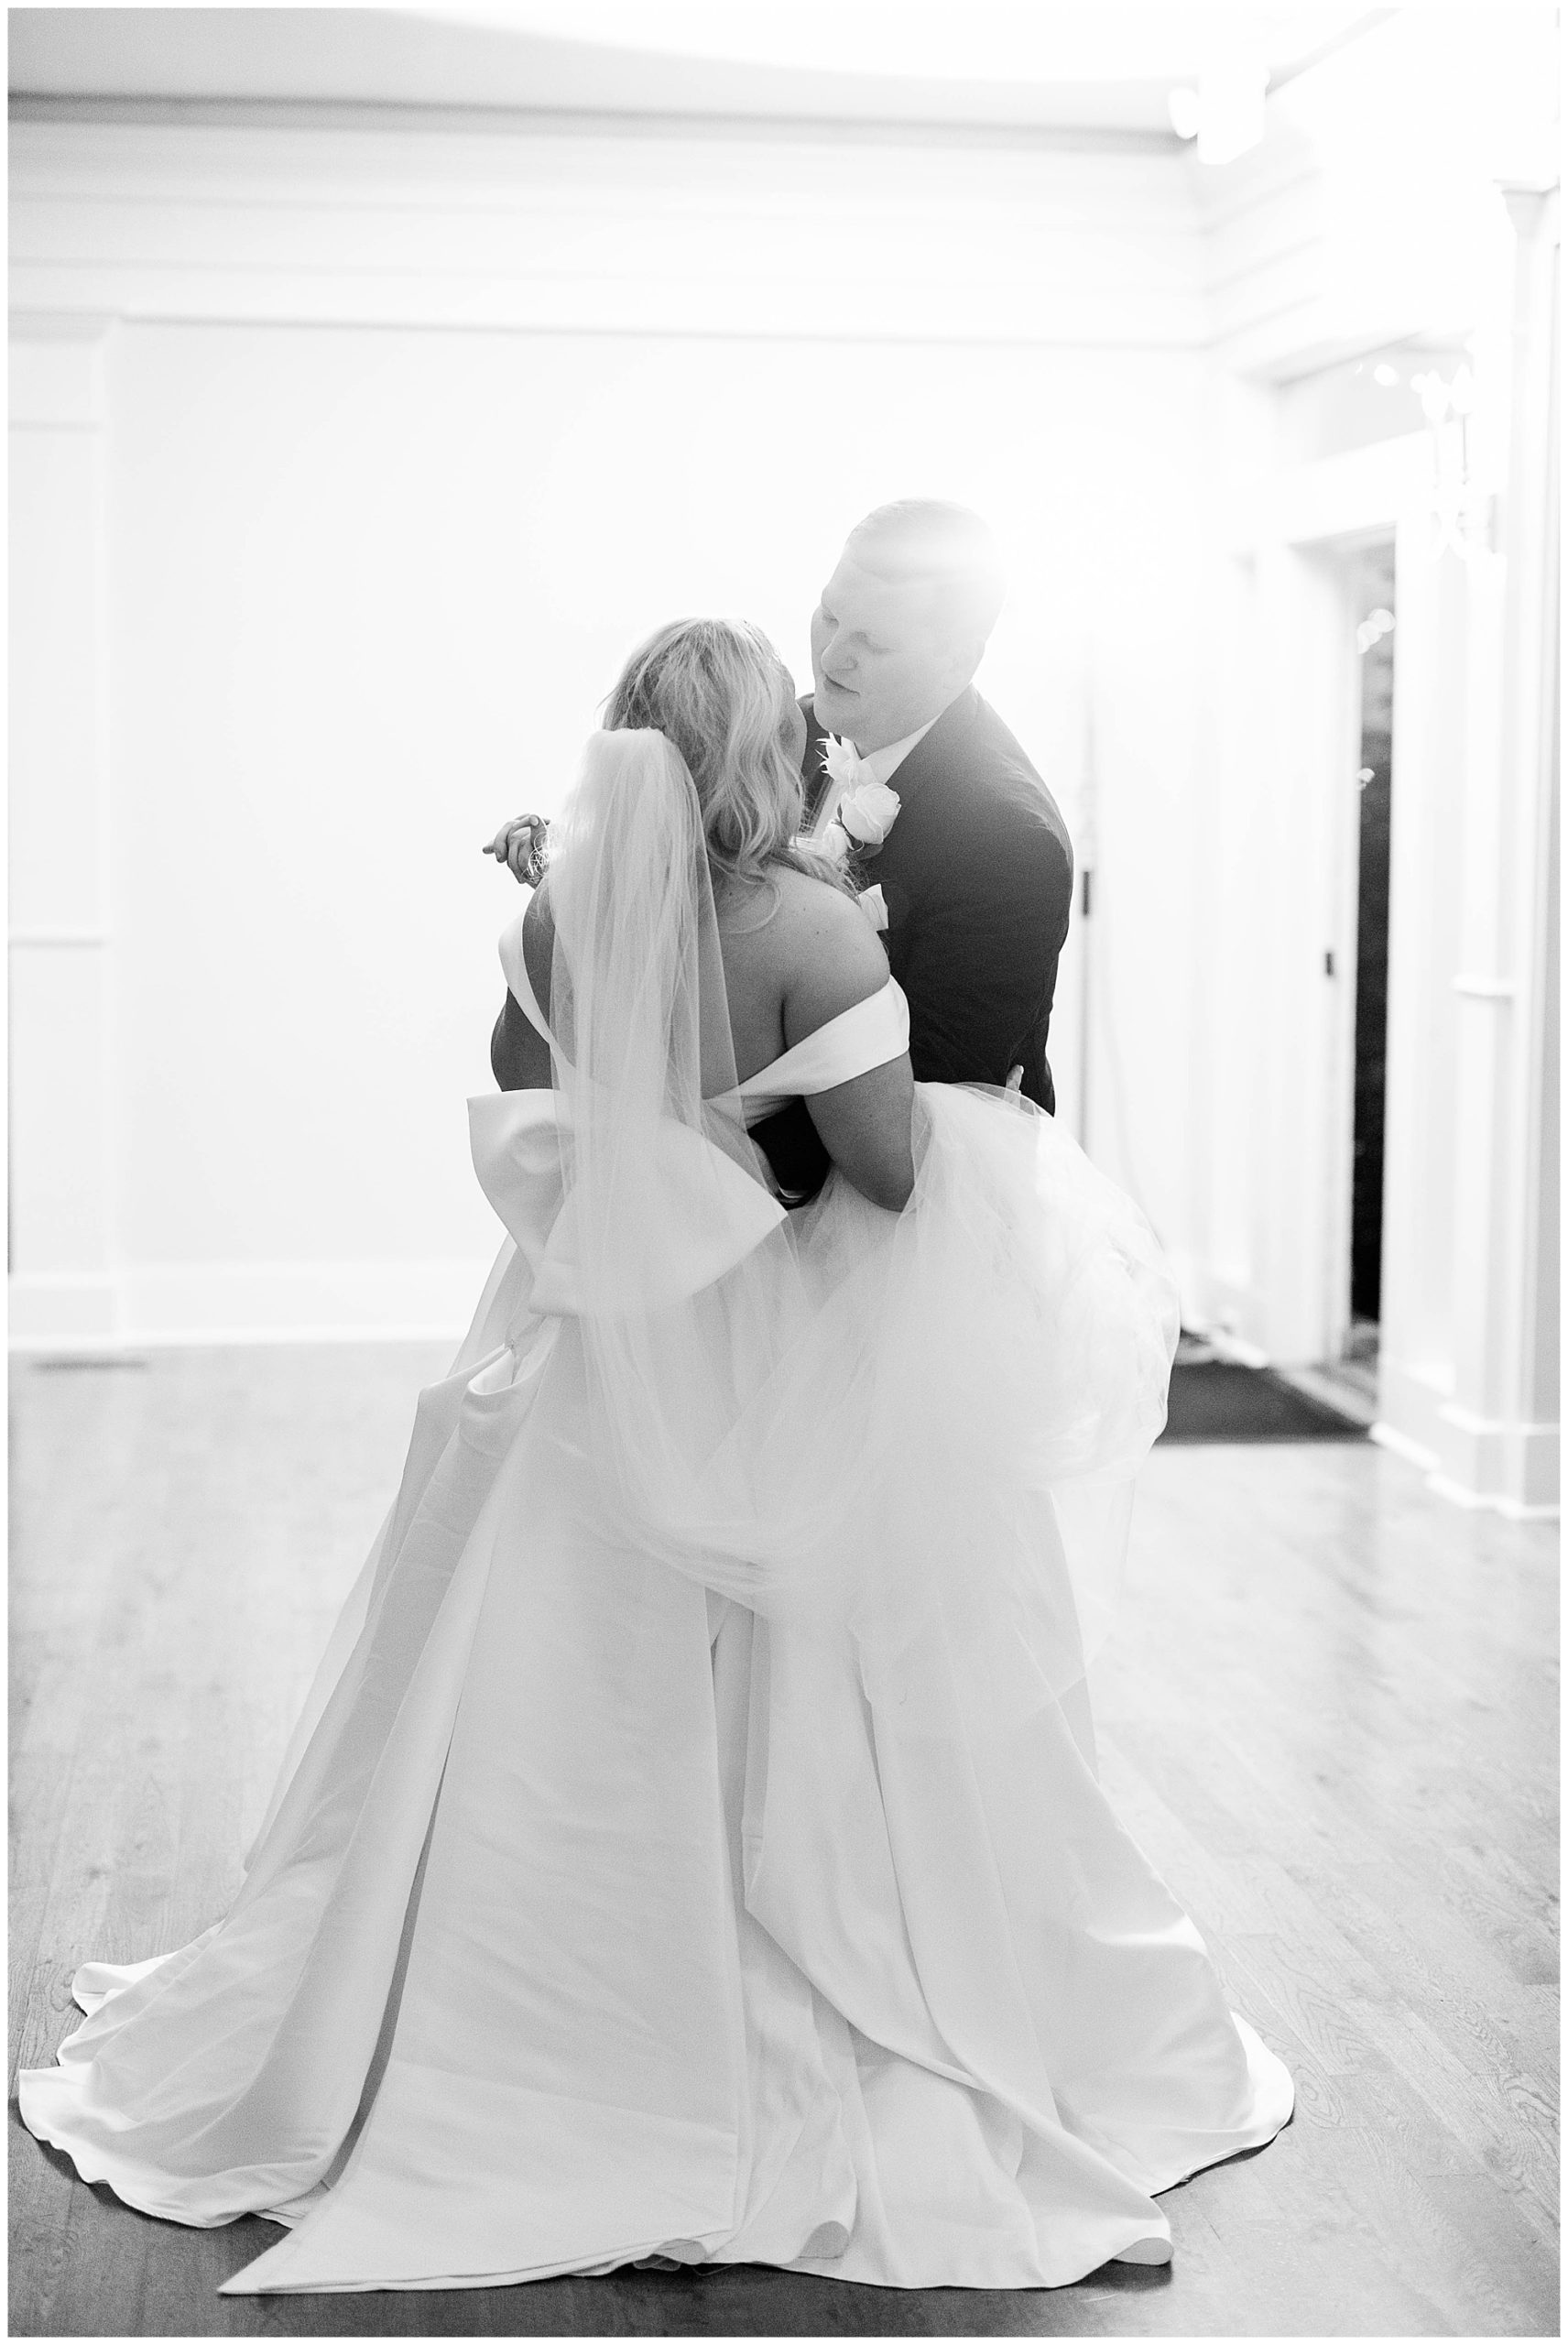 Eleanor Stenner Photography - a Birmingham, Alabama Wedding Photographer - shares 2023 wedding trends